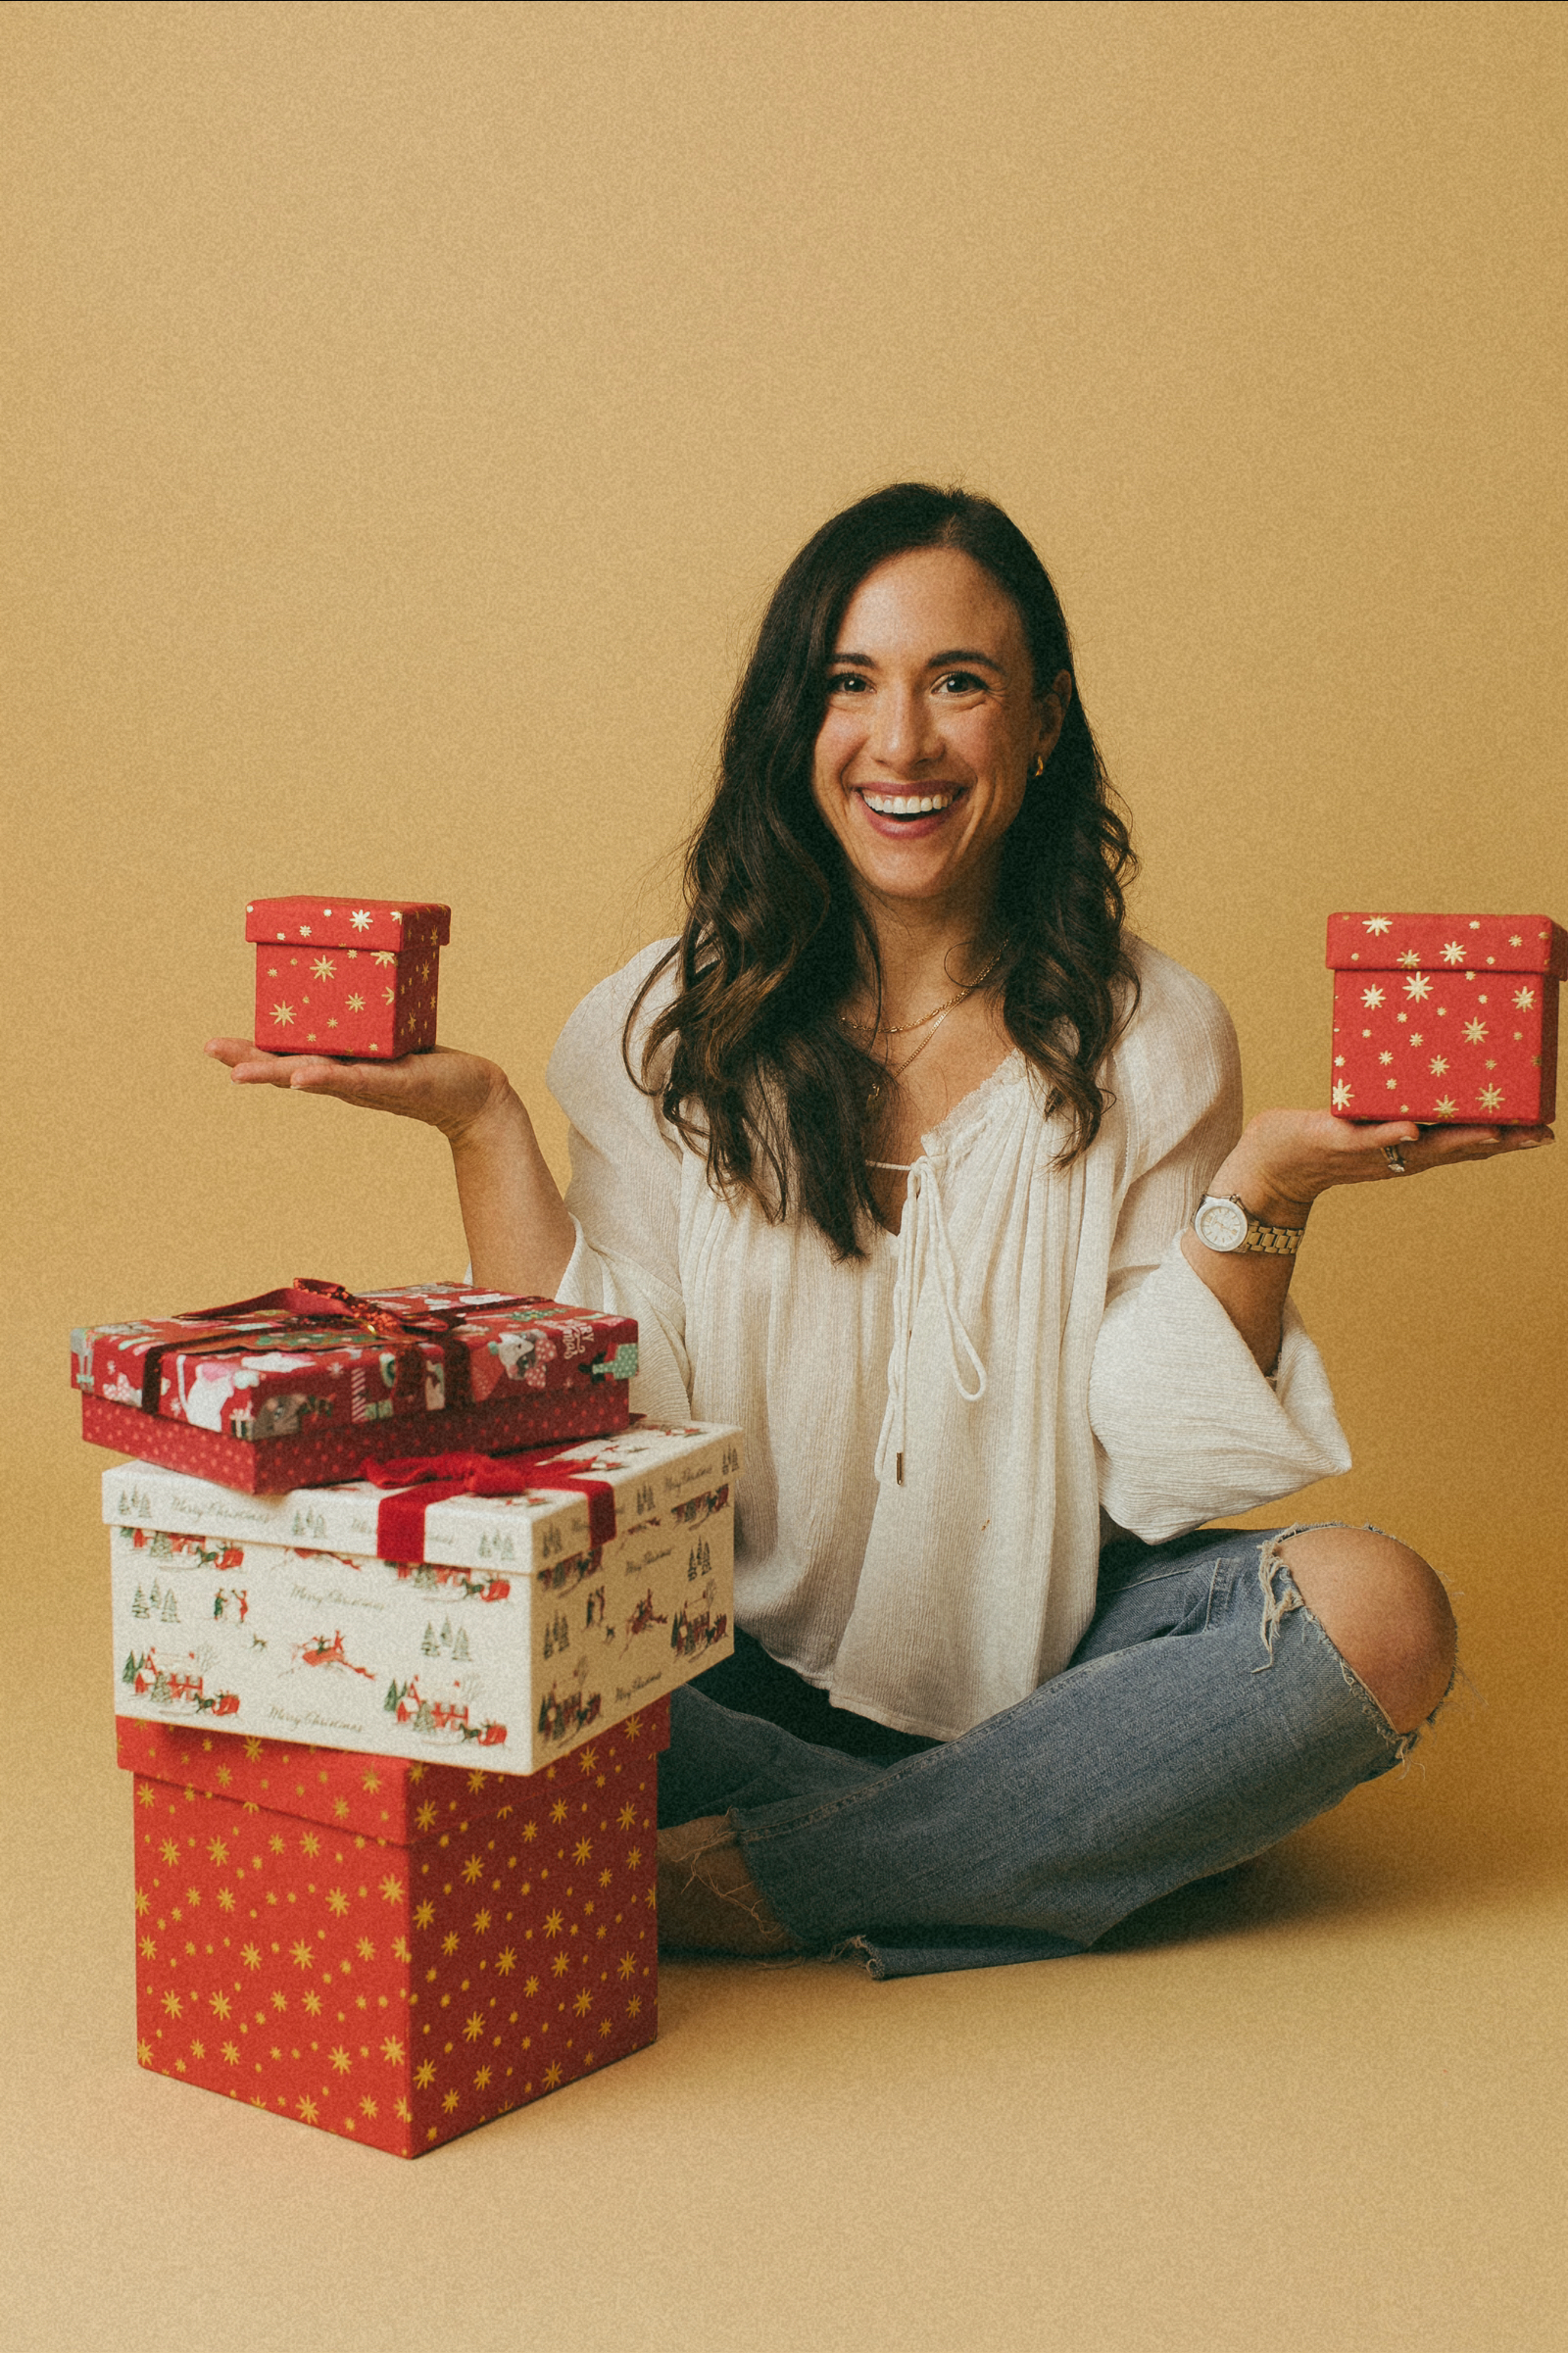 Ana smiling straightforward holding gifts